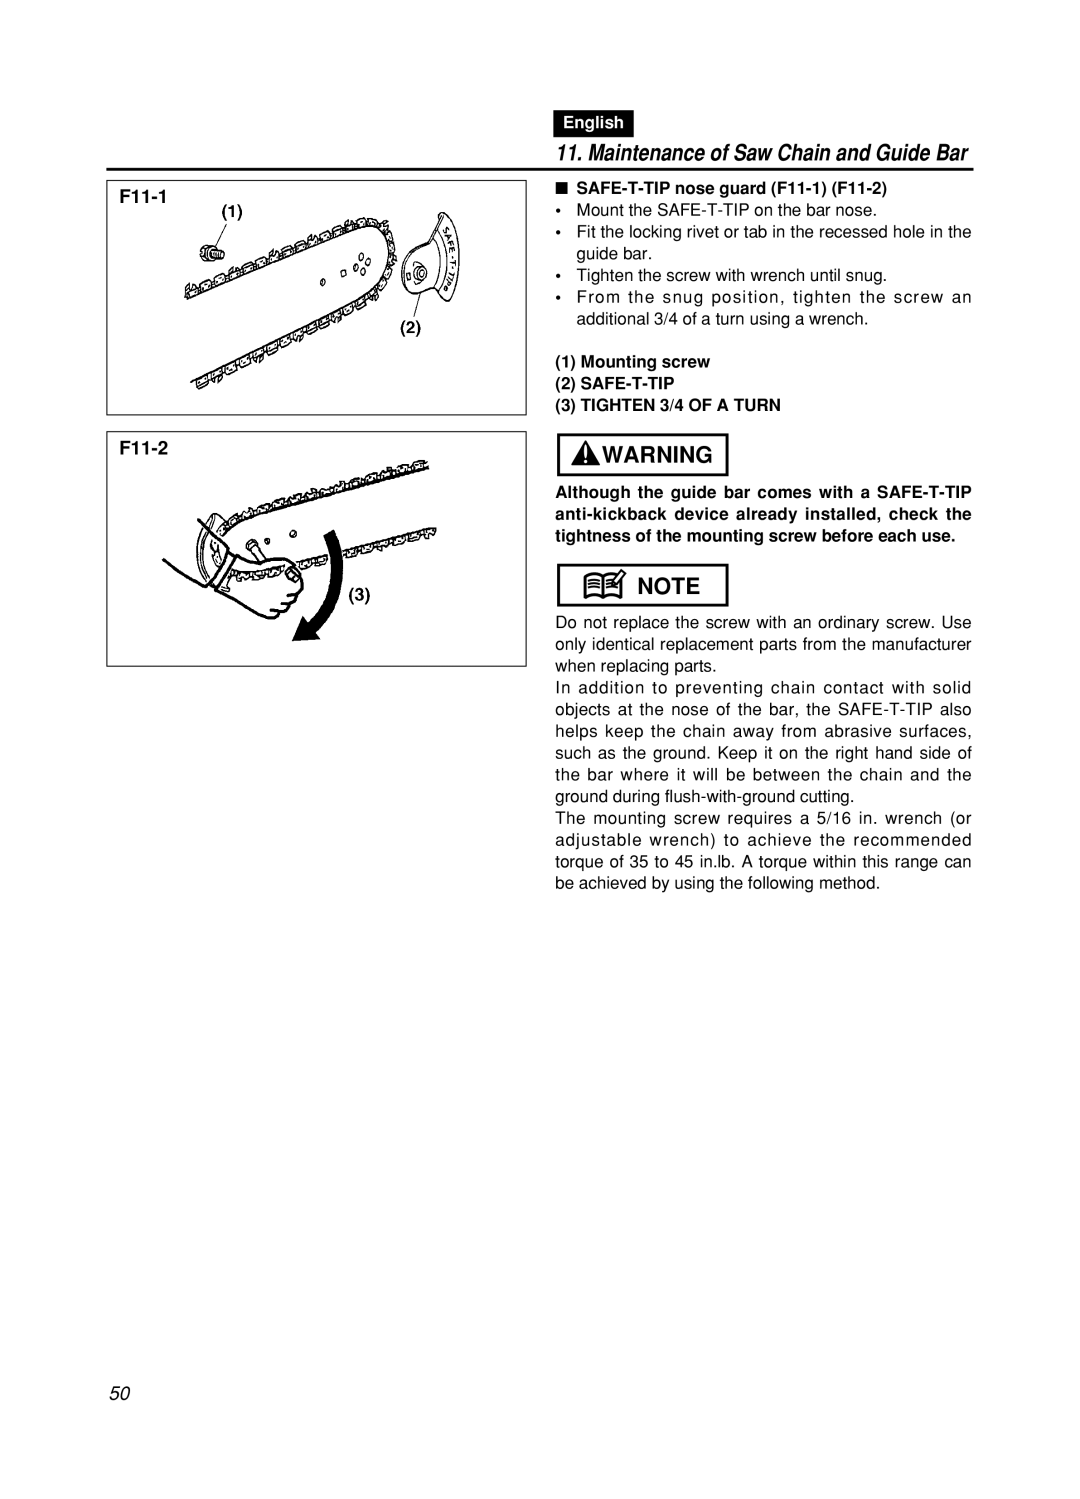 Zenoah GZ400 manual Maintenance of Saw Chain and Guide Bar, F11-1 F11-2, English 